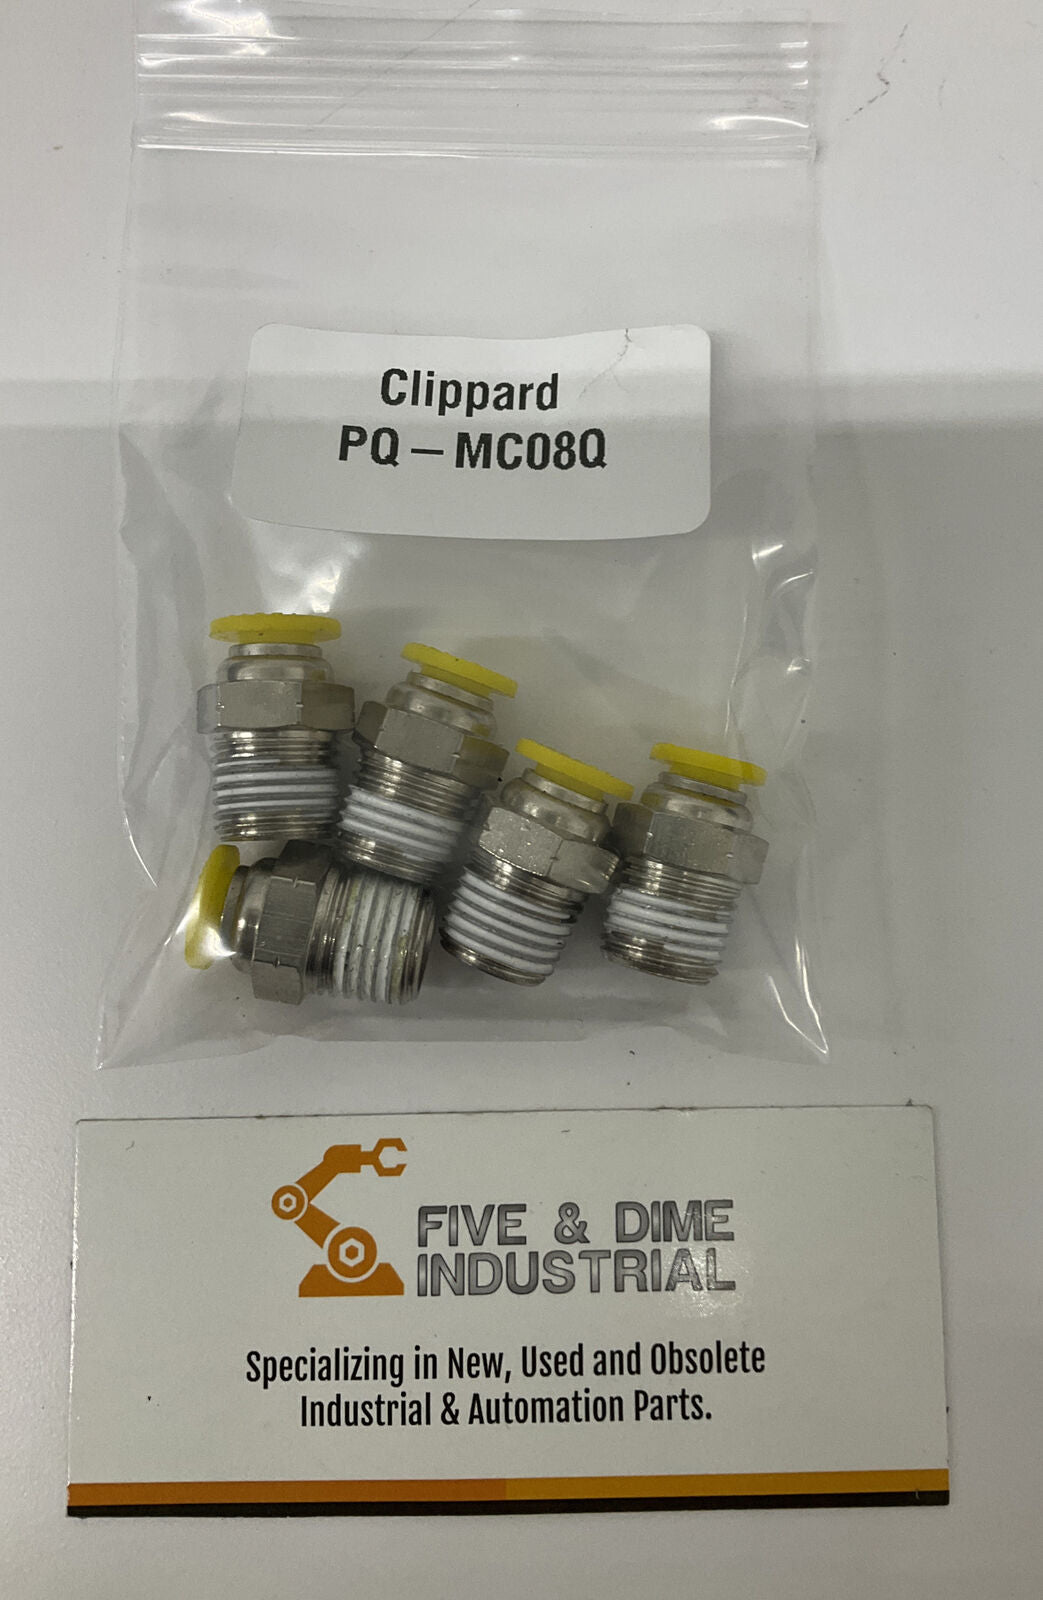 Clippard PQ-MC08Q  5-Pack  1/4'' NPT x 1/4'' OD Fittings (GR102)